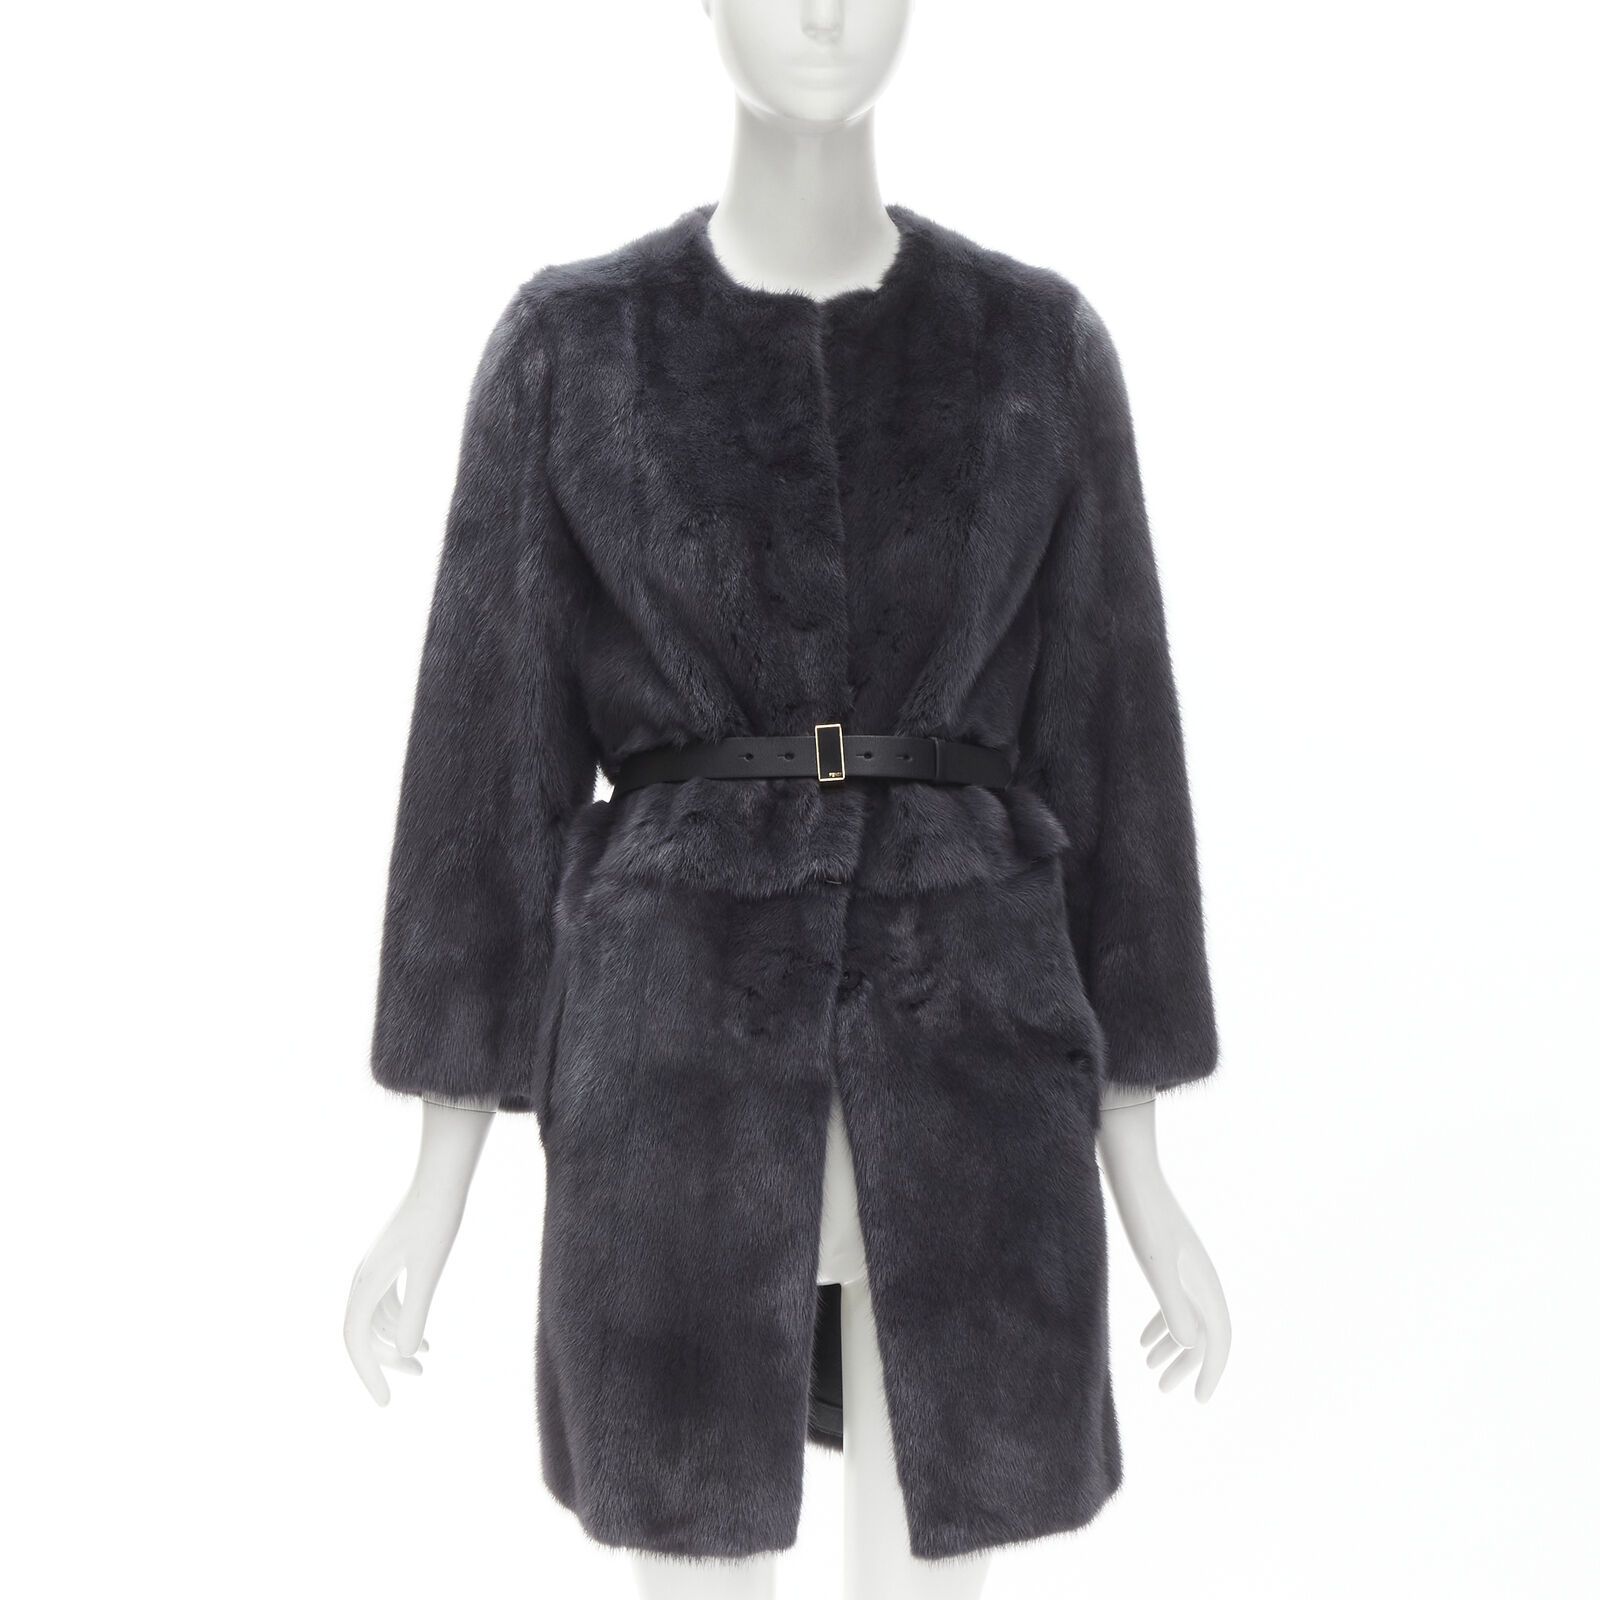 Fendi FENDI grey black fur leather 4-way reversible zip belted coat jacket IT38 Size XS / US 0-2 / IT 36-38 - 1 Preview